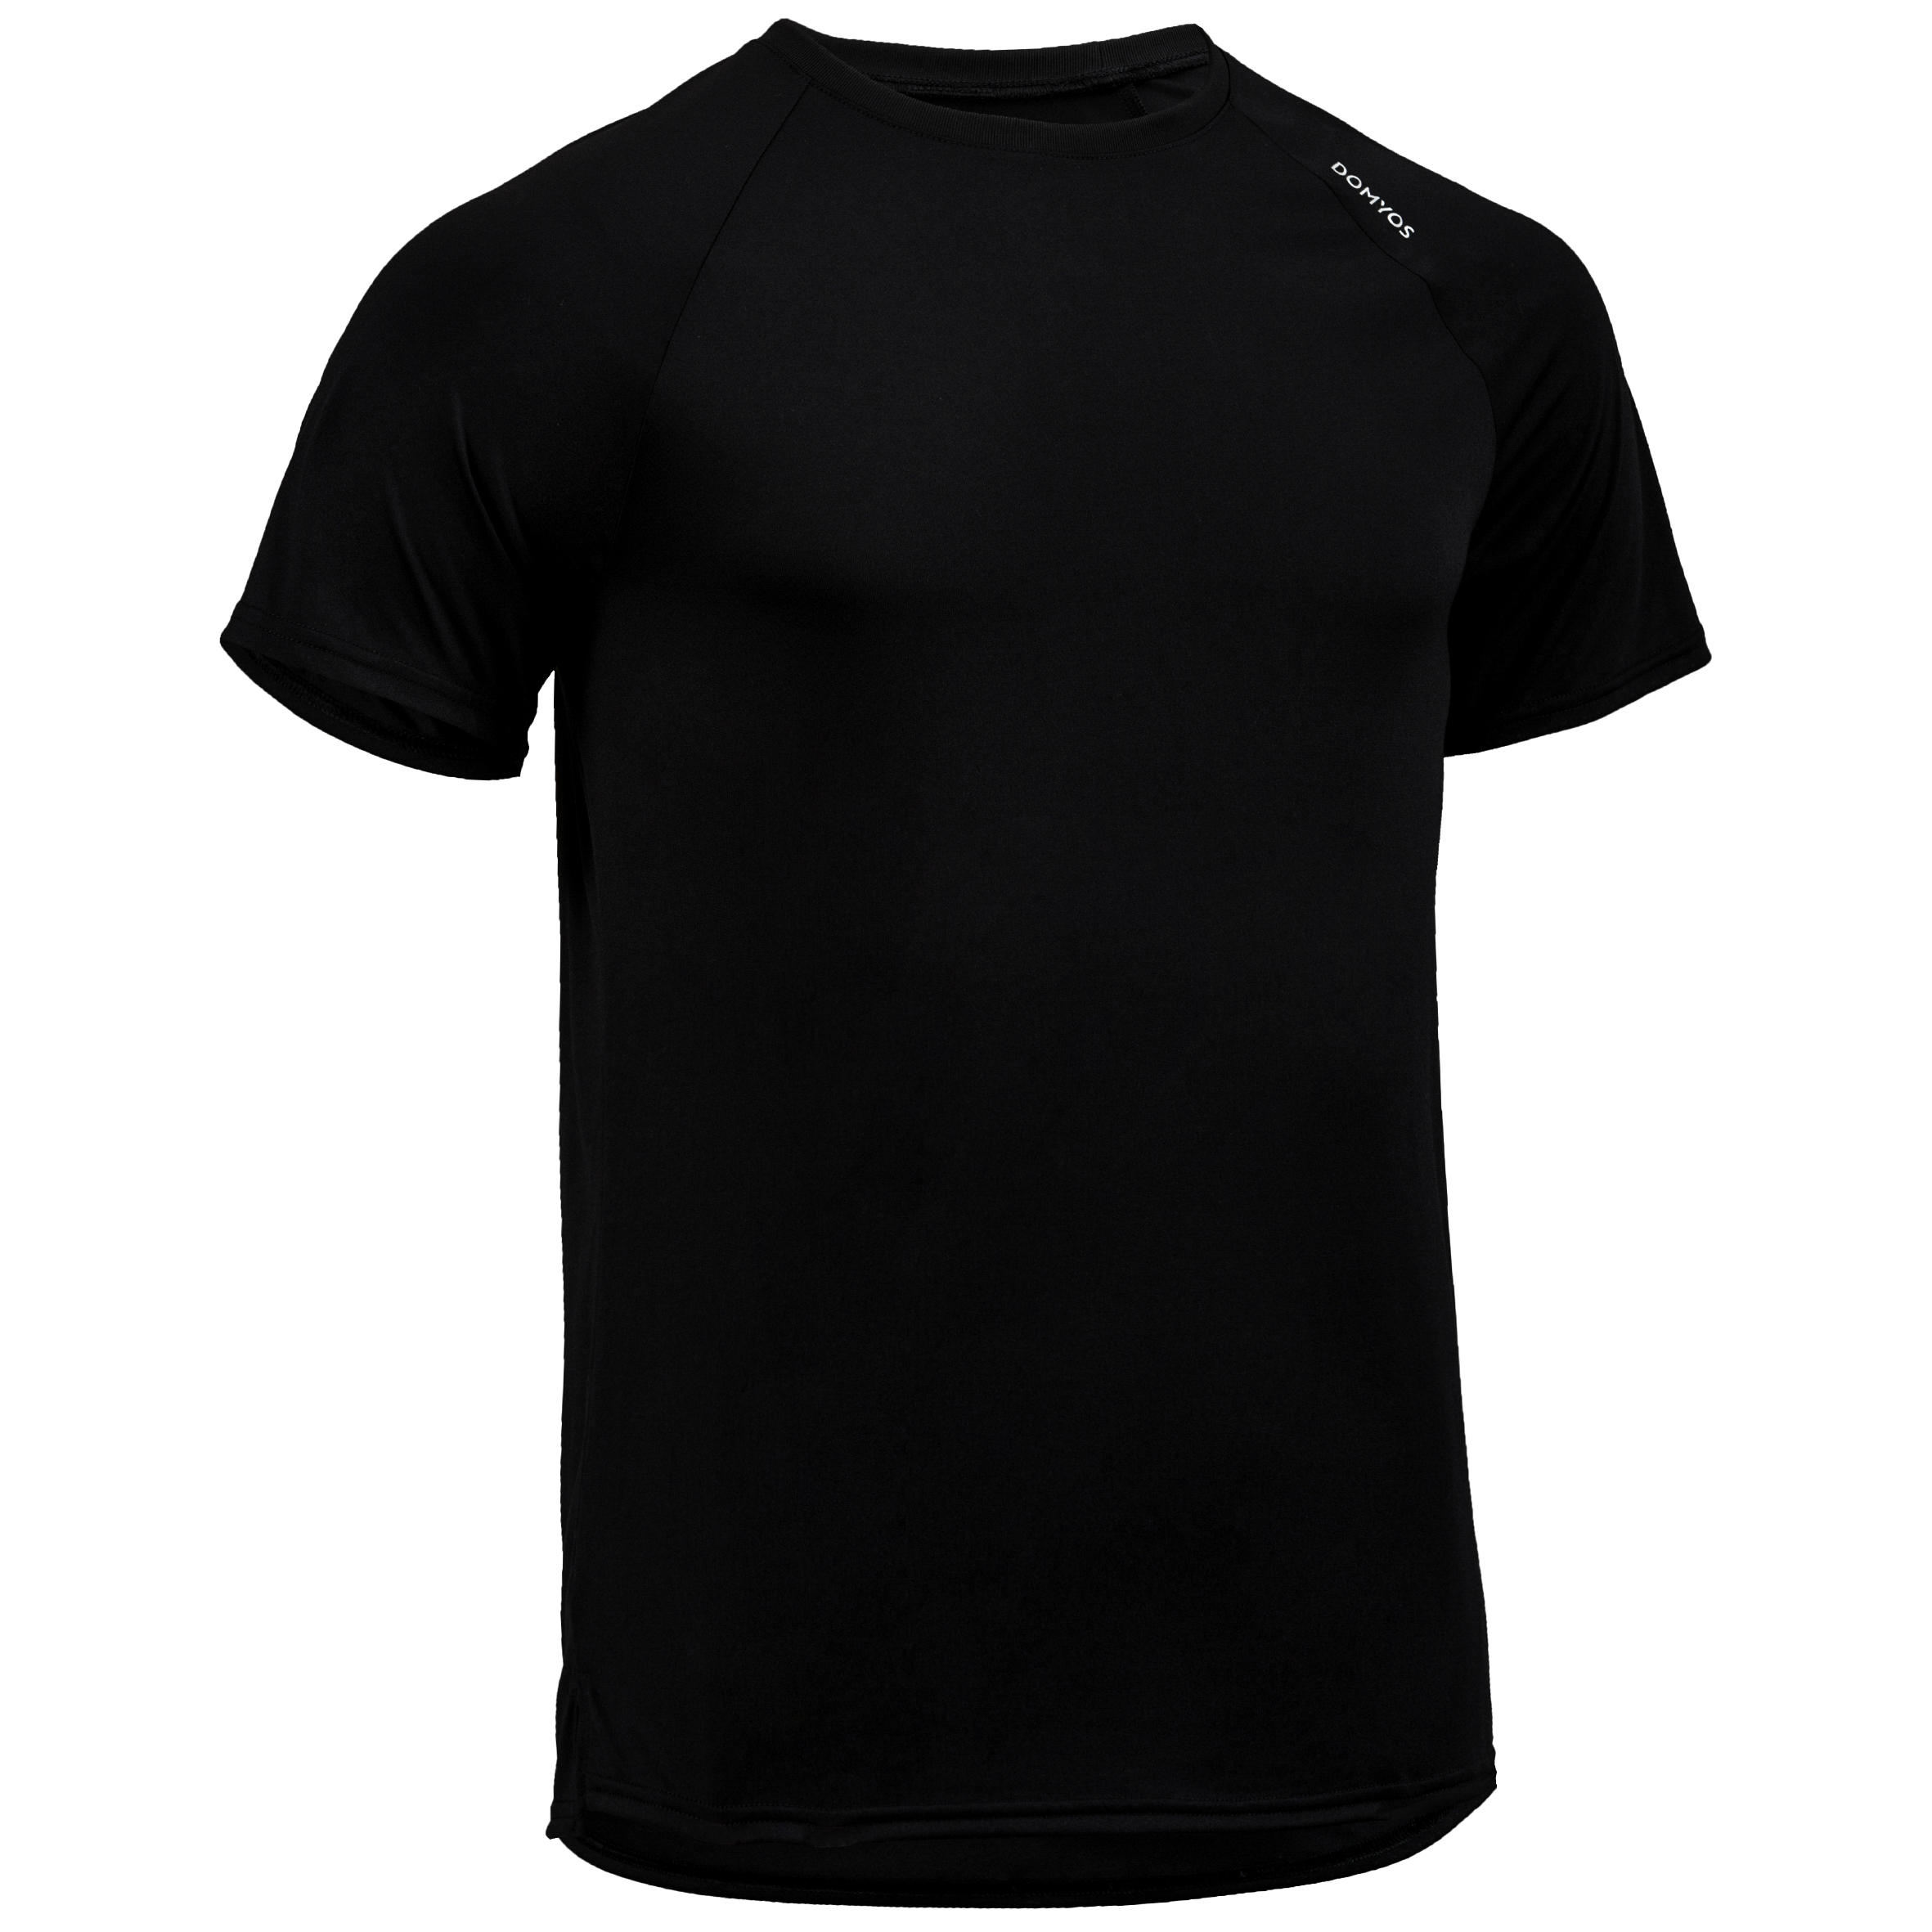 Men T-shirts - Buy T-shirt for Men 